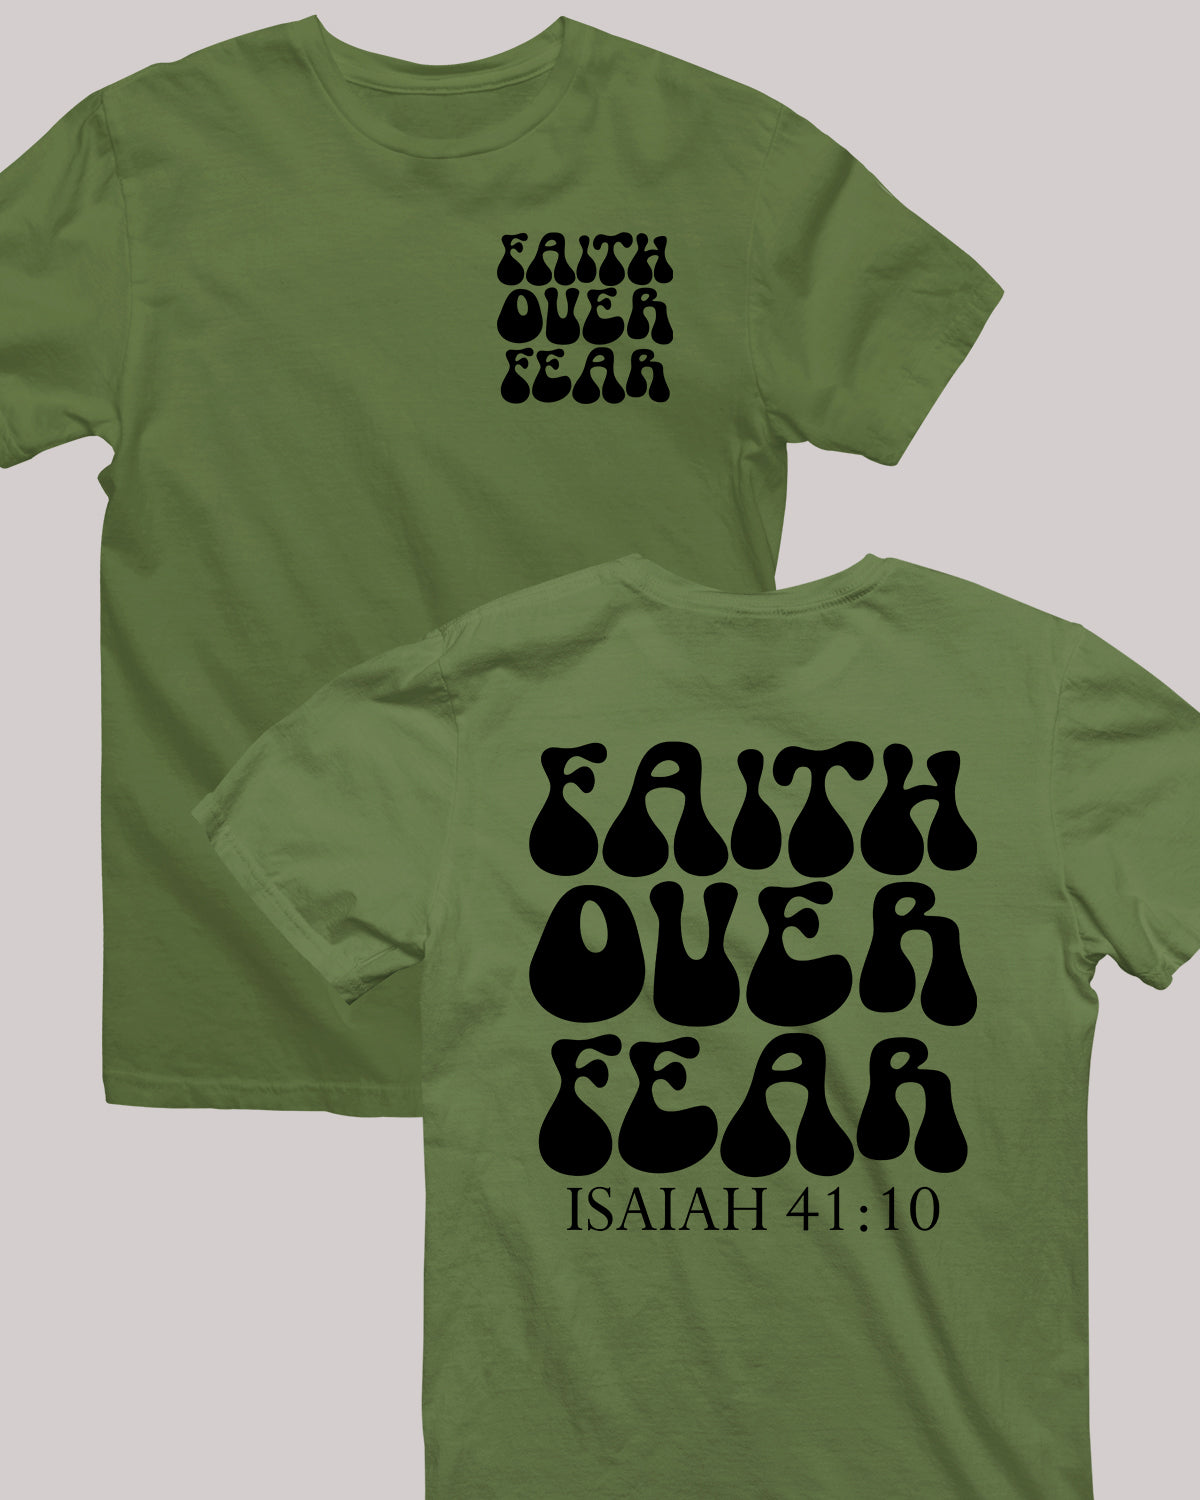 Faith Over fear Christian apparel t shirts Front back